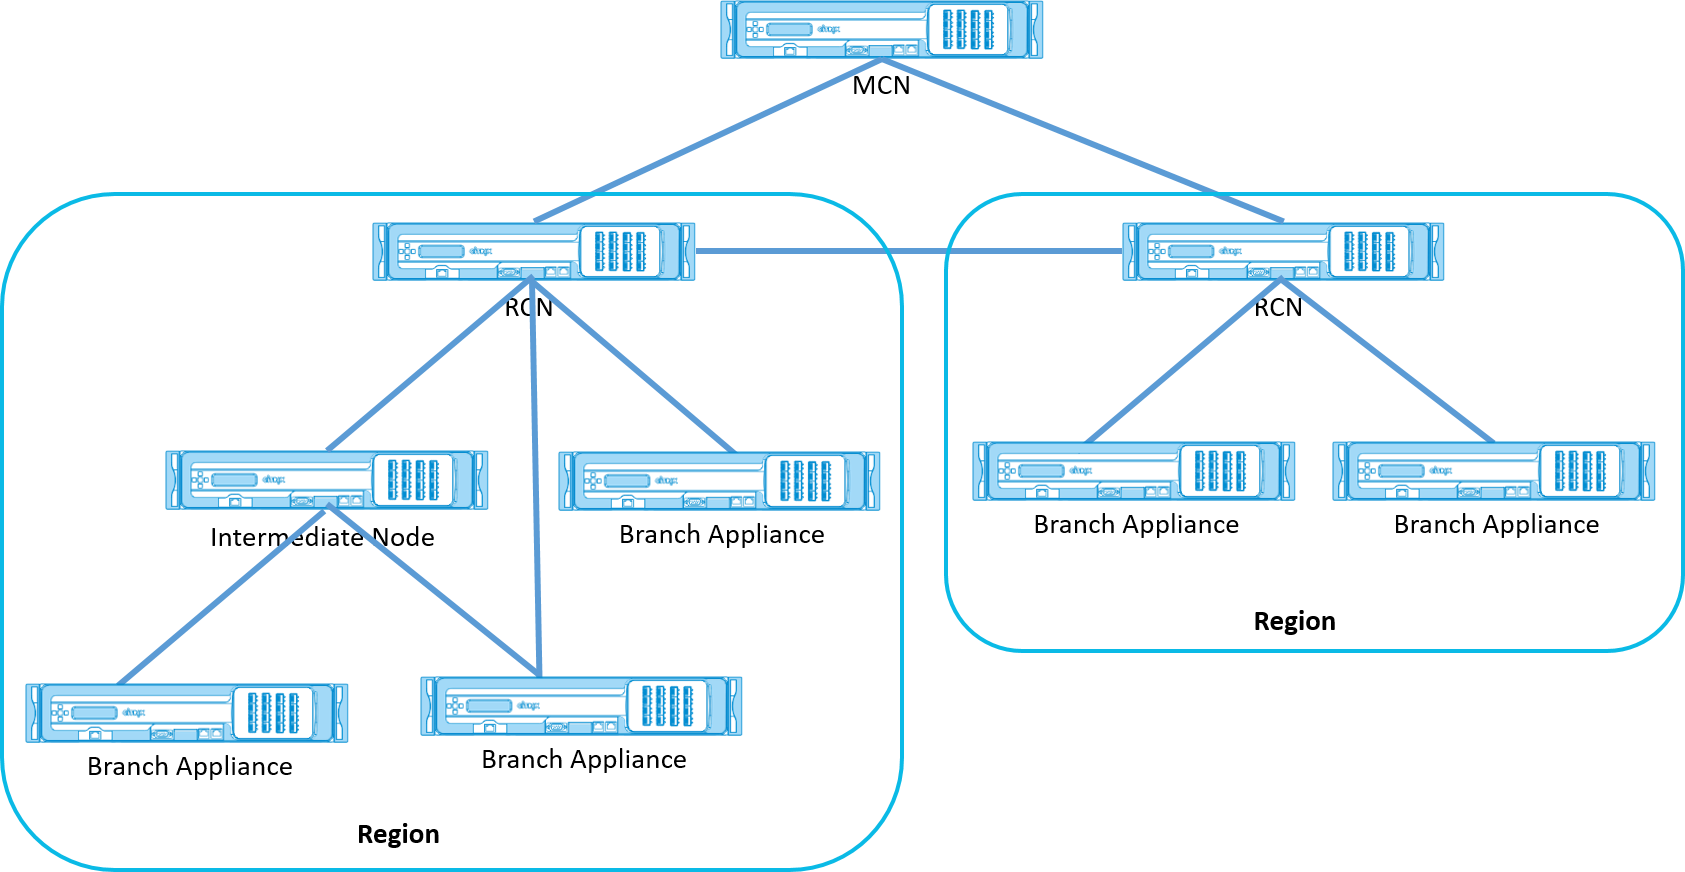 Multi-region deployment topology